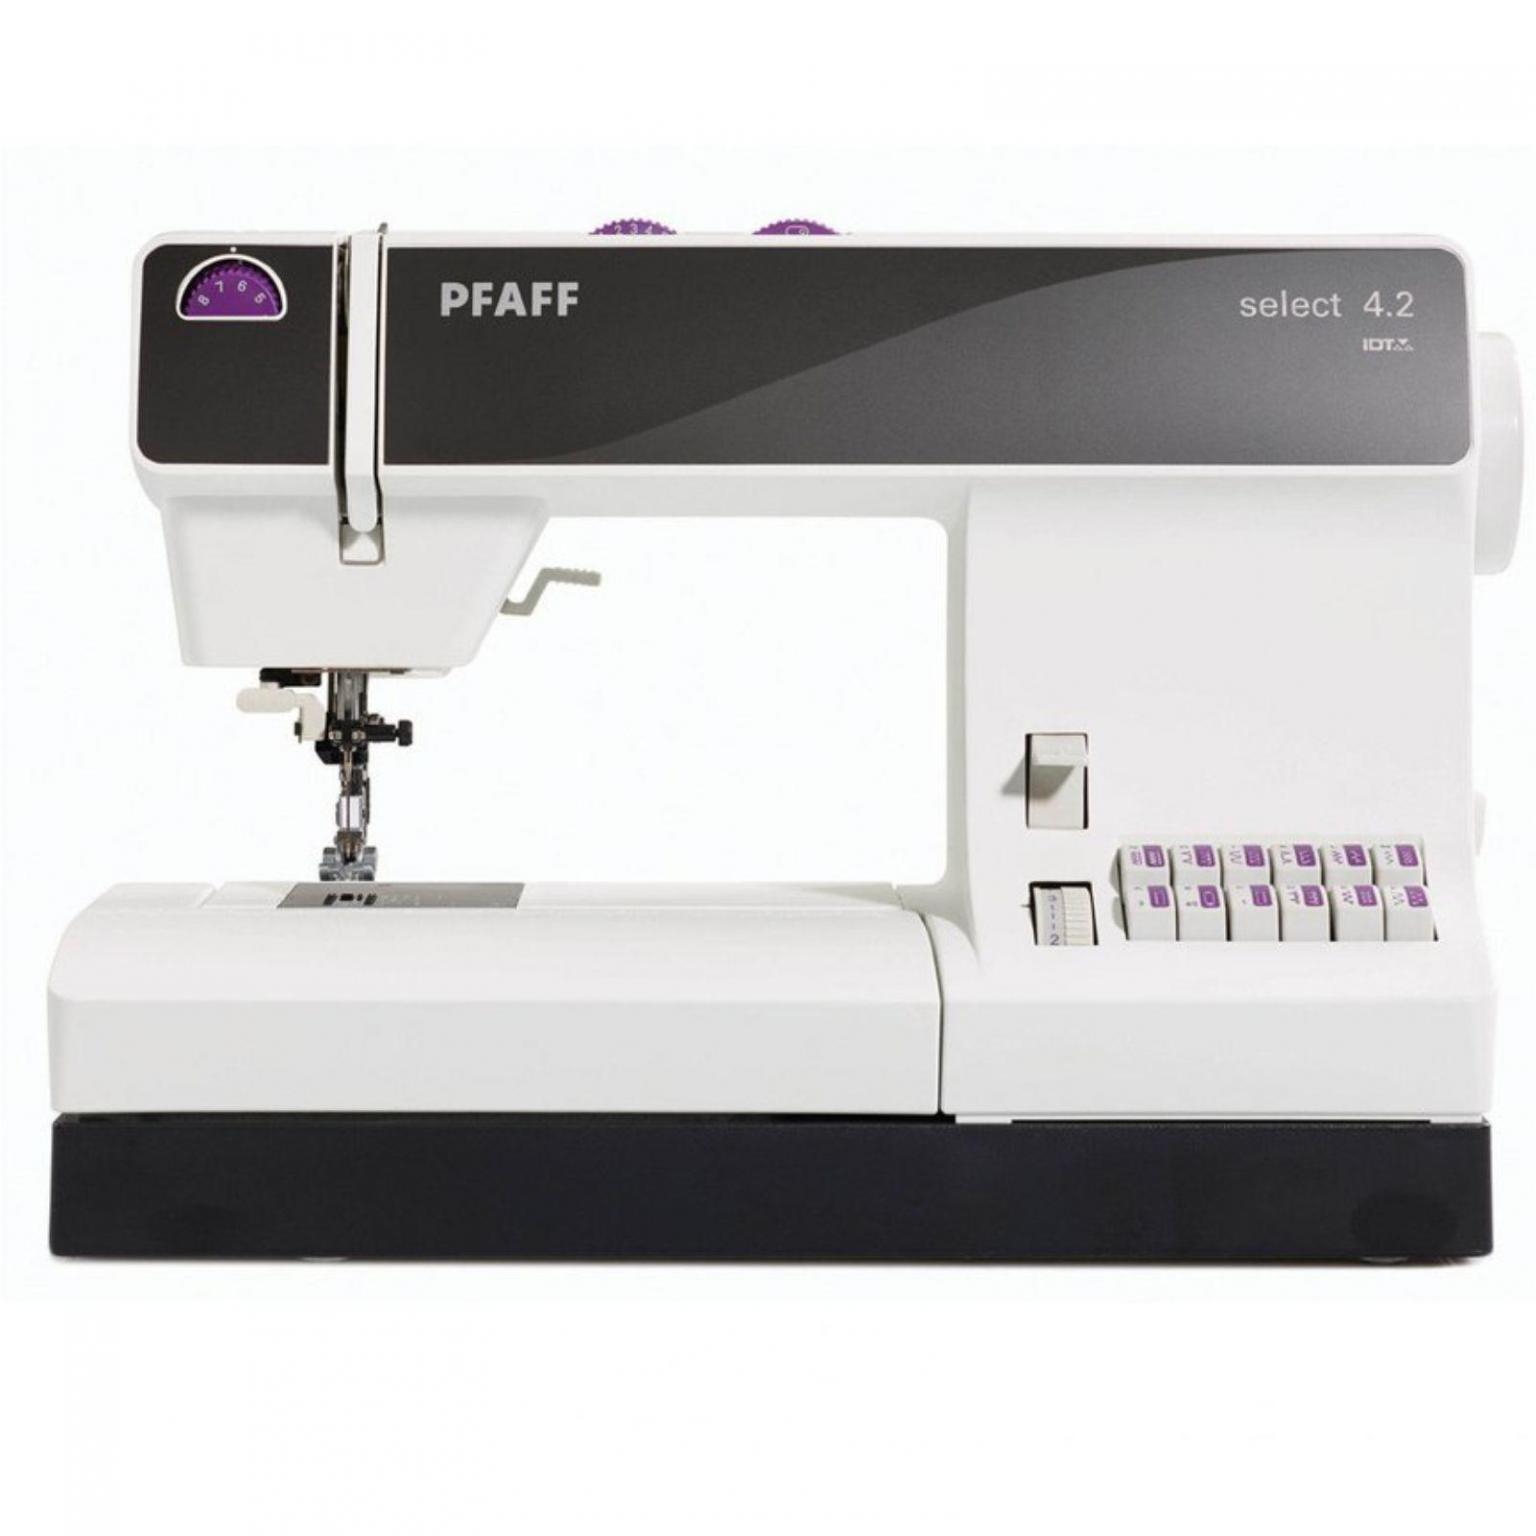 Sewing Machine | Pfaff Select 4.2 | More Sewing